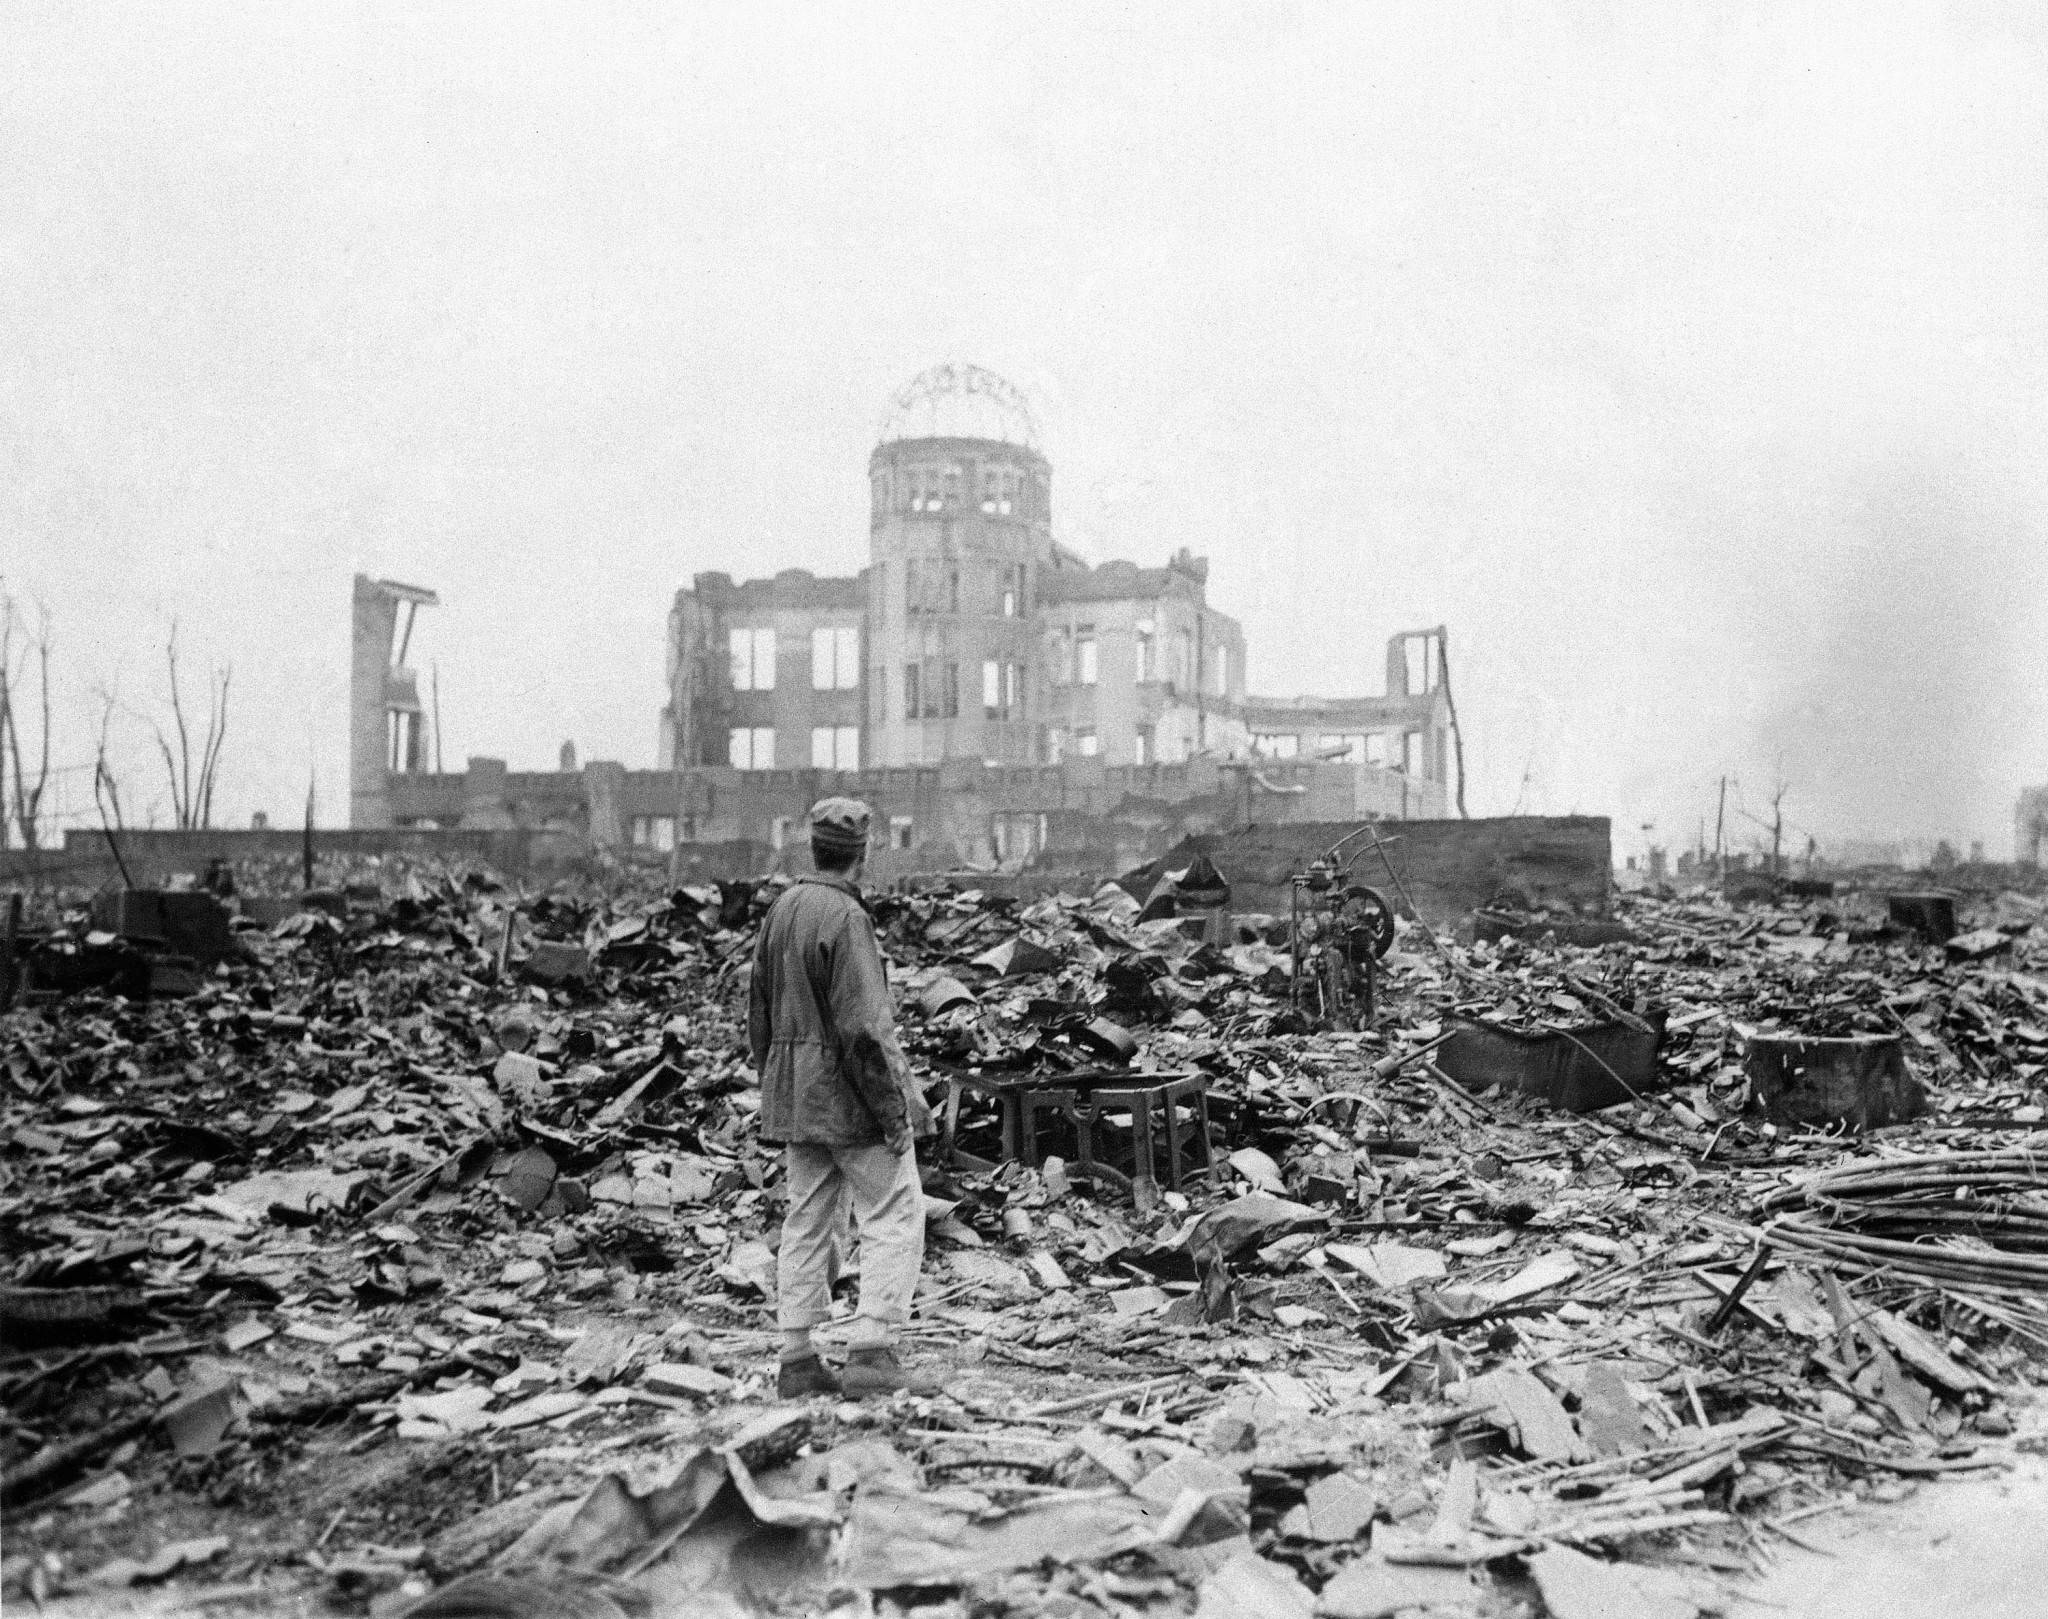 hiroshima-dopo-bombardamento-6-agosto-1945.jpg